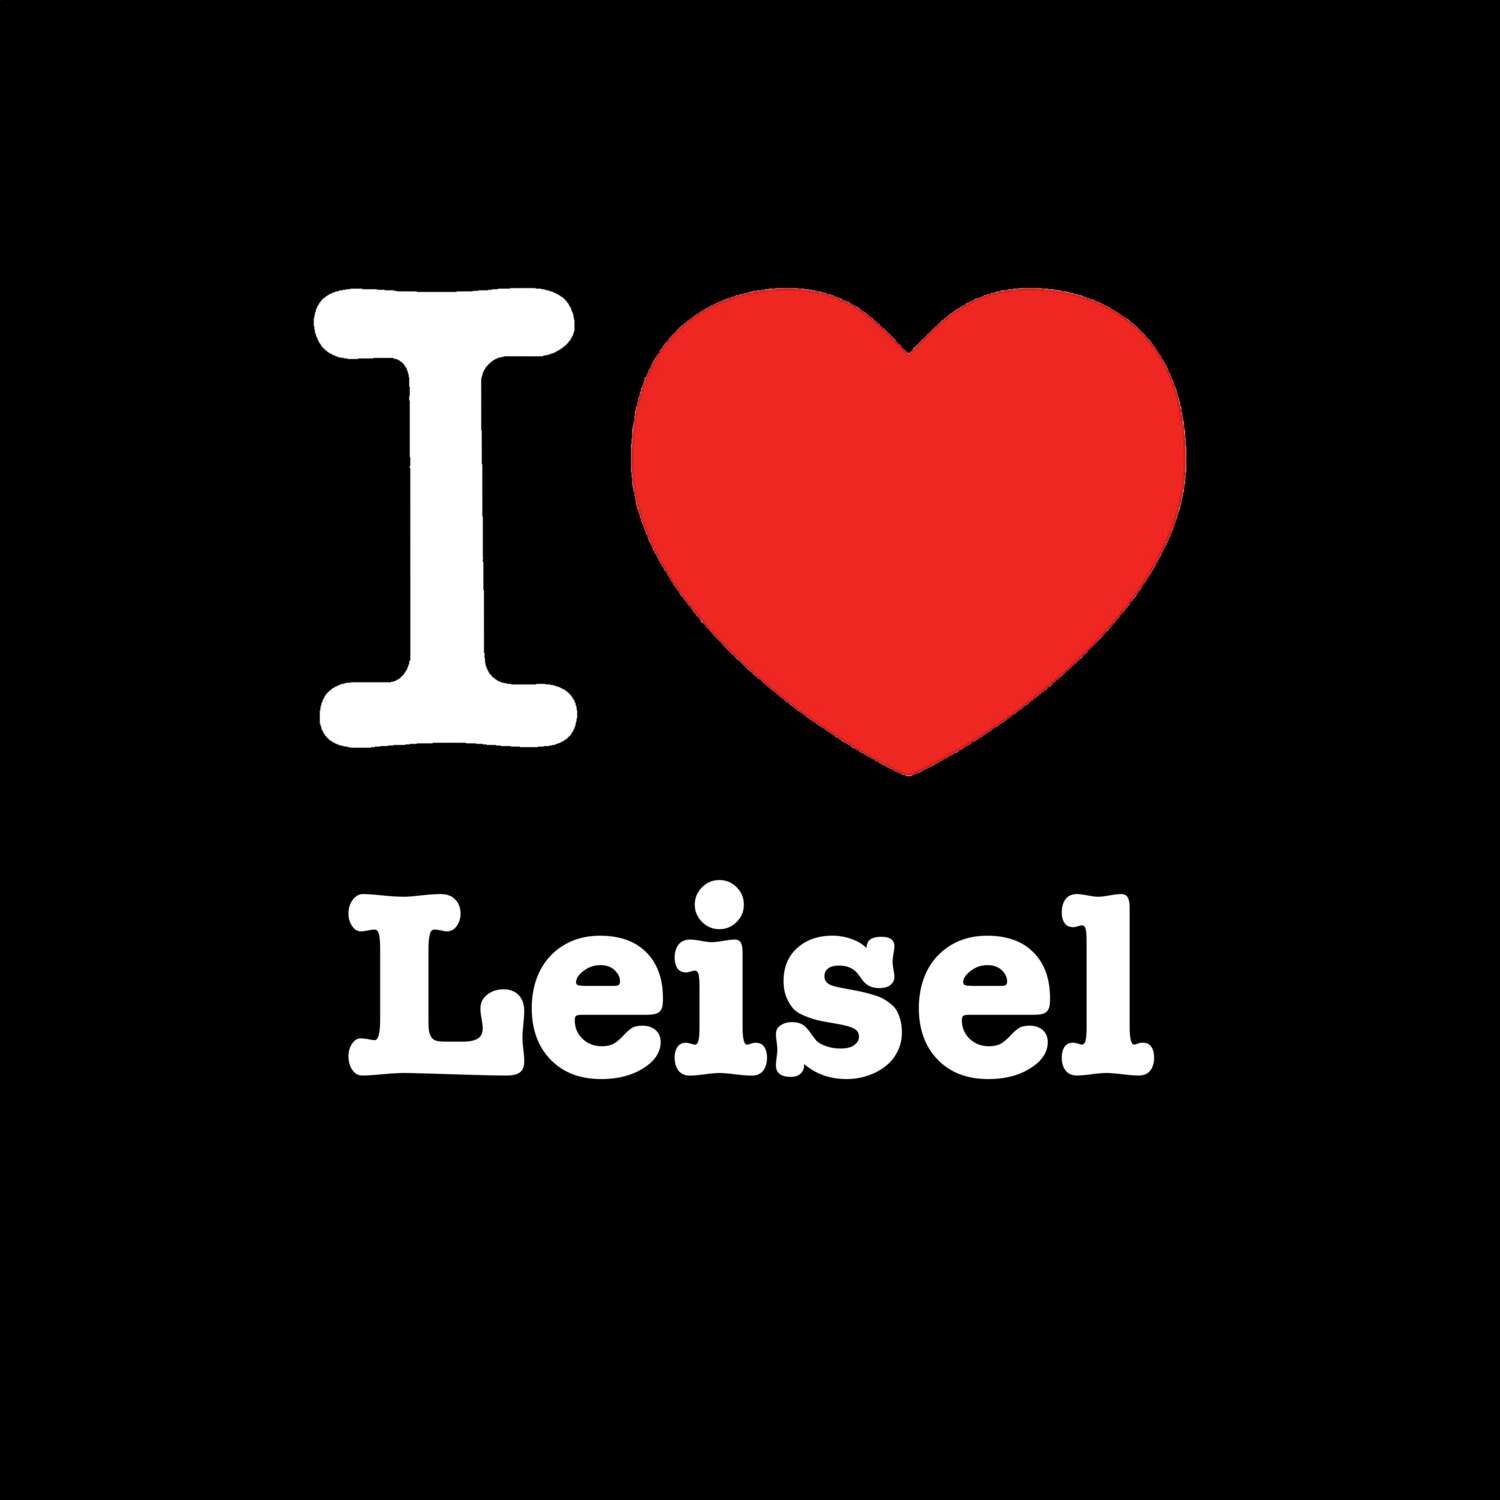 Leisel T-Shirt »I love«